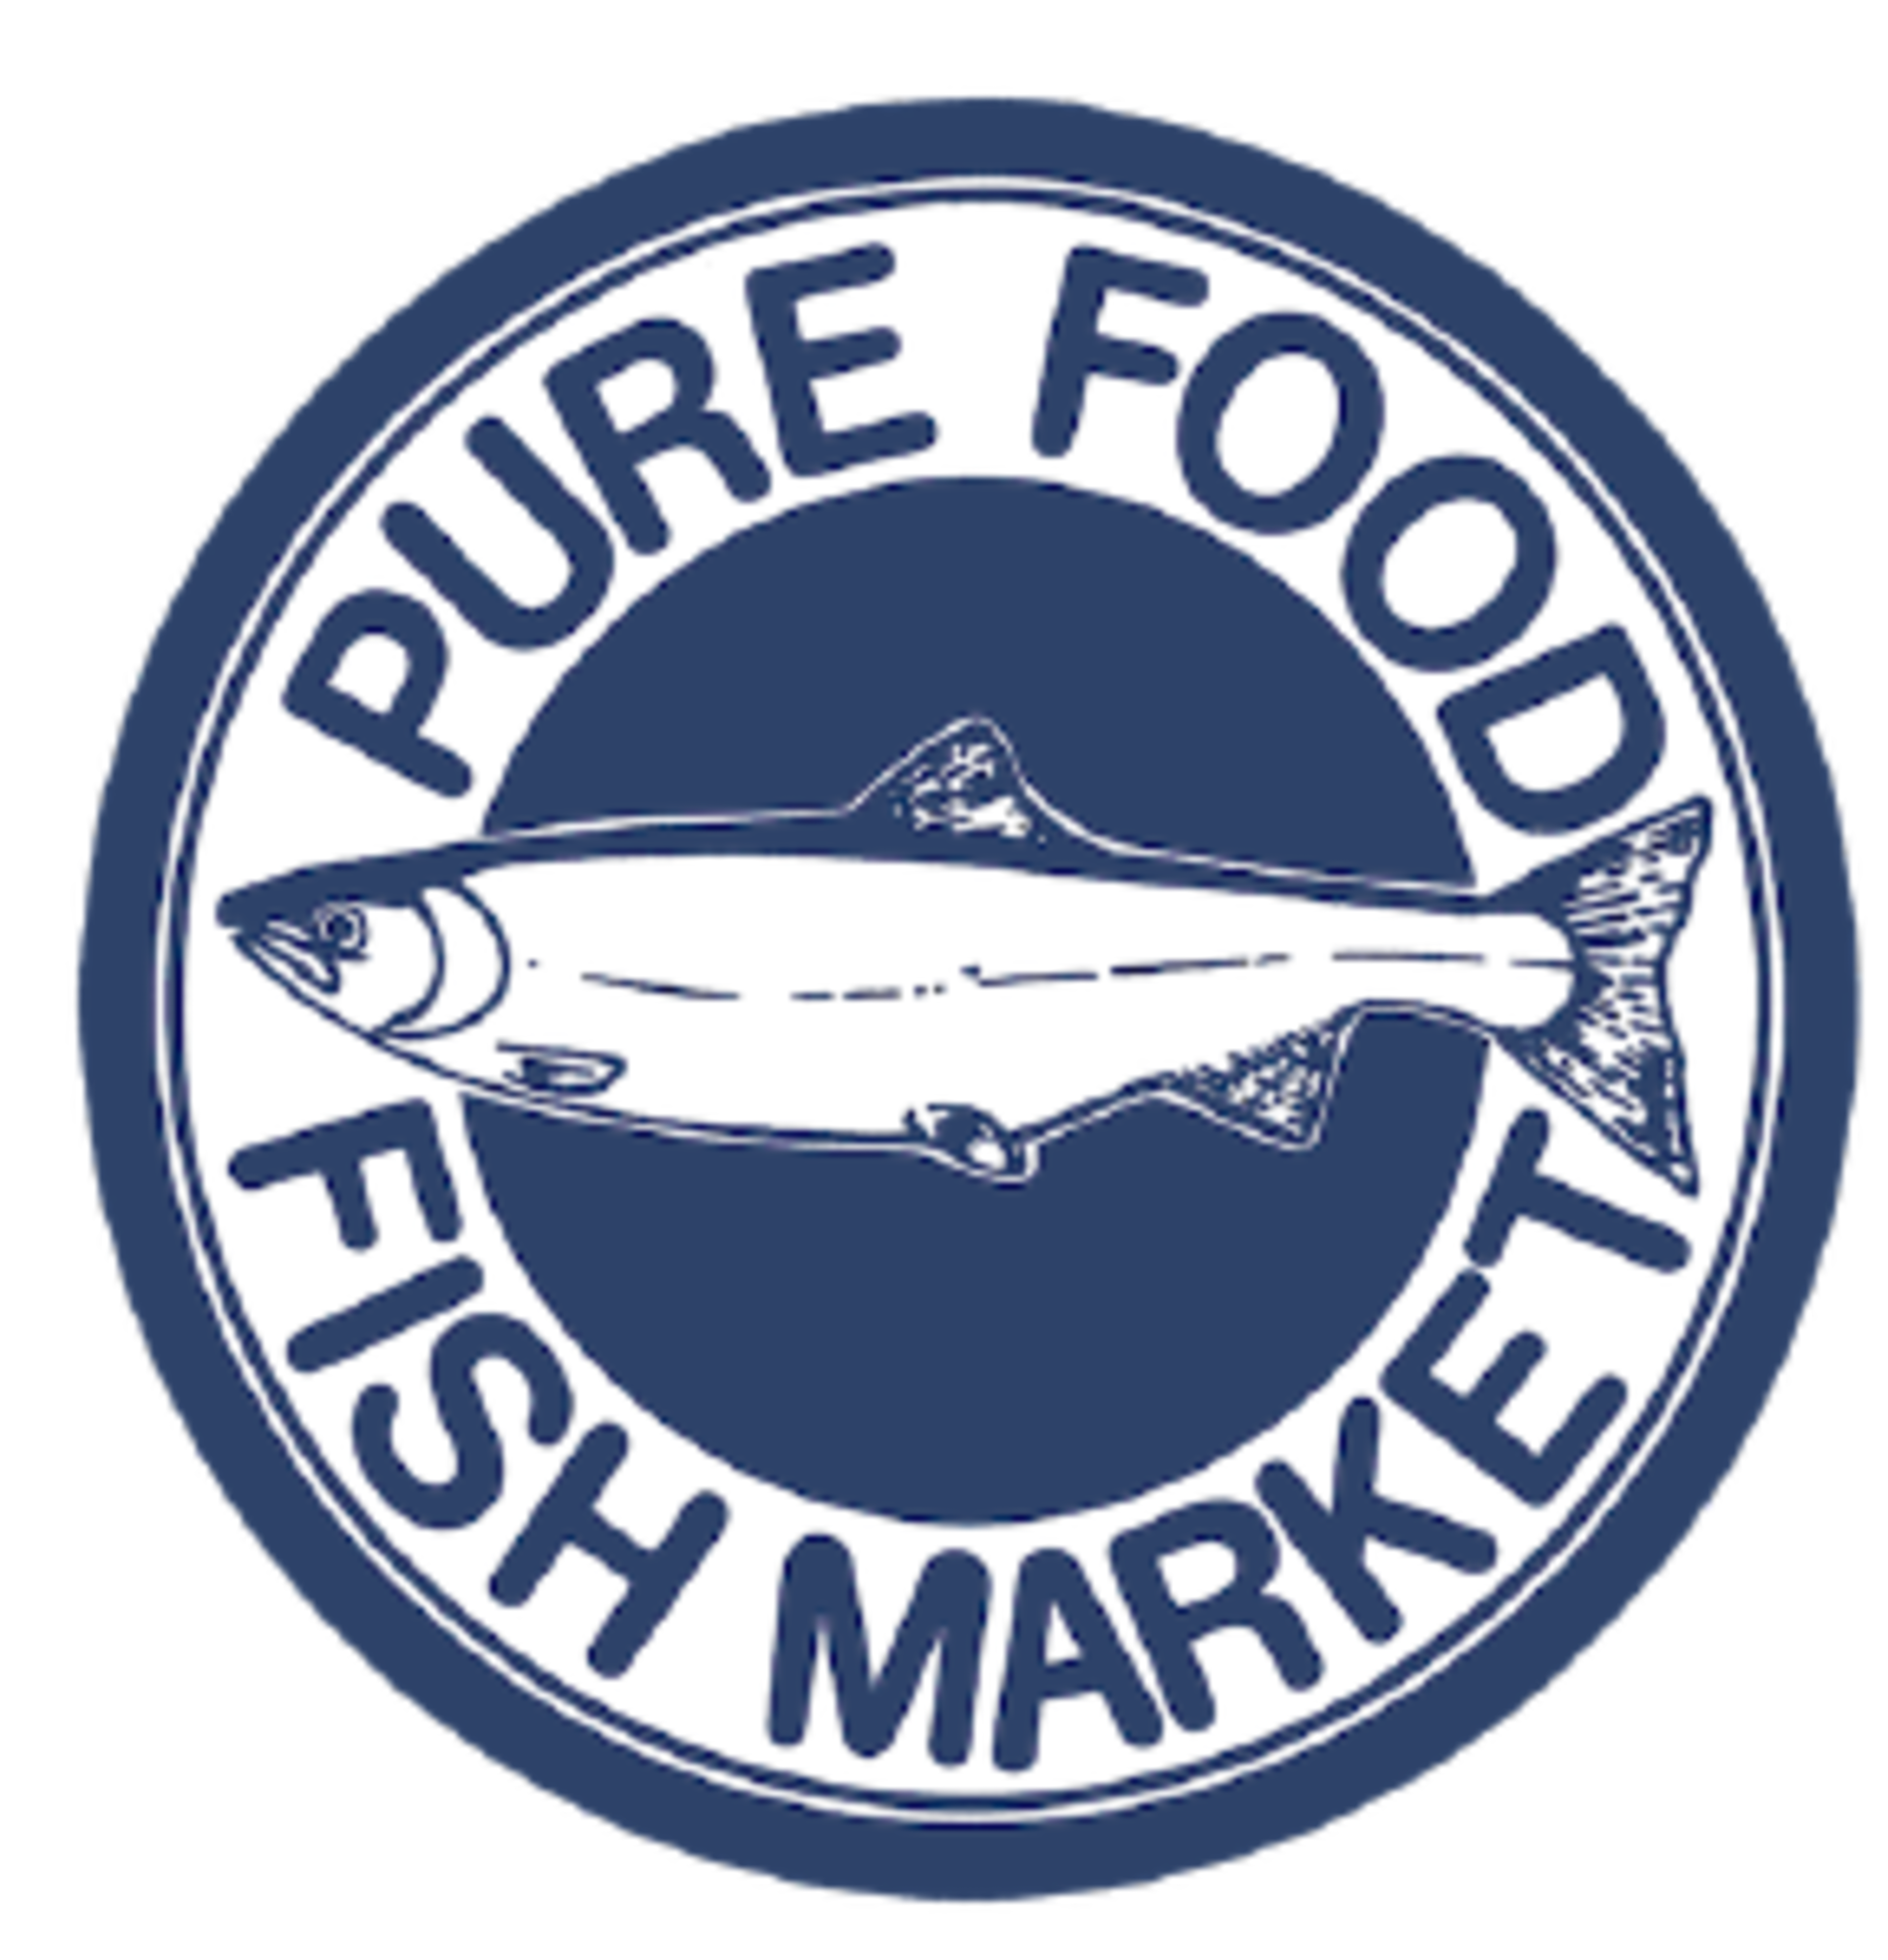 Pure Food Fish Market Code